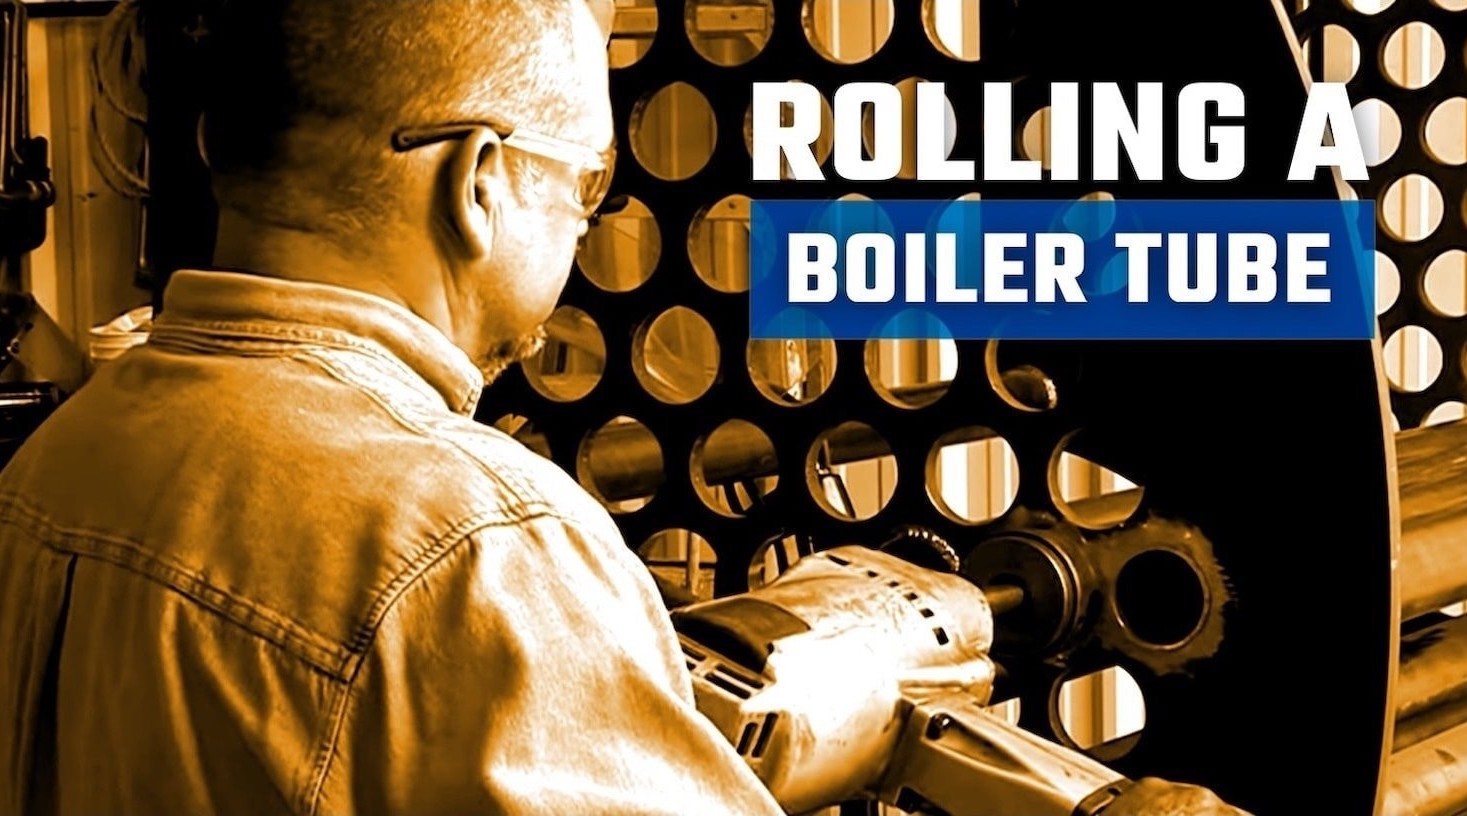 Rolling a Boiler Tube